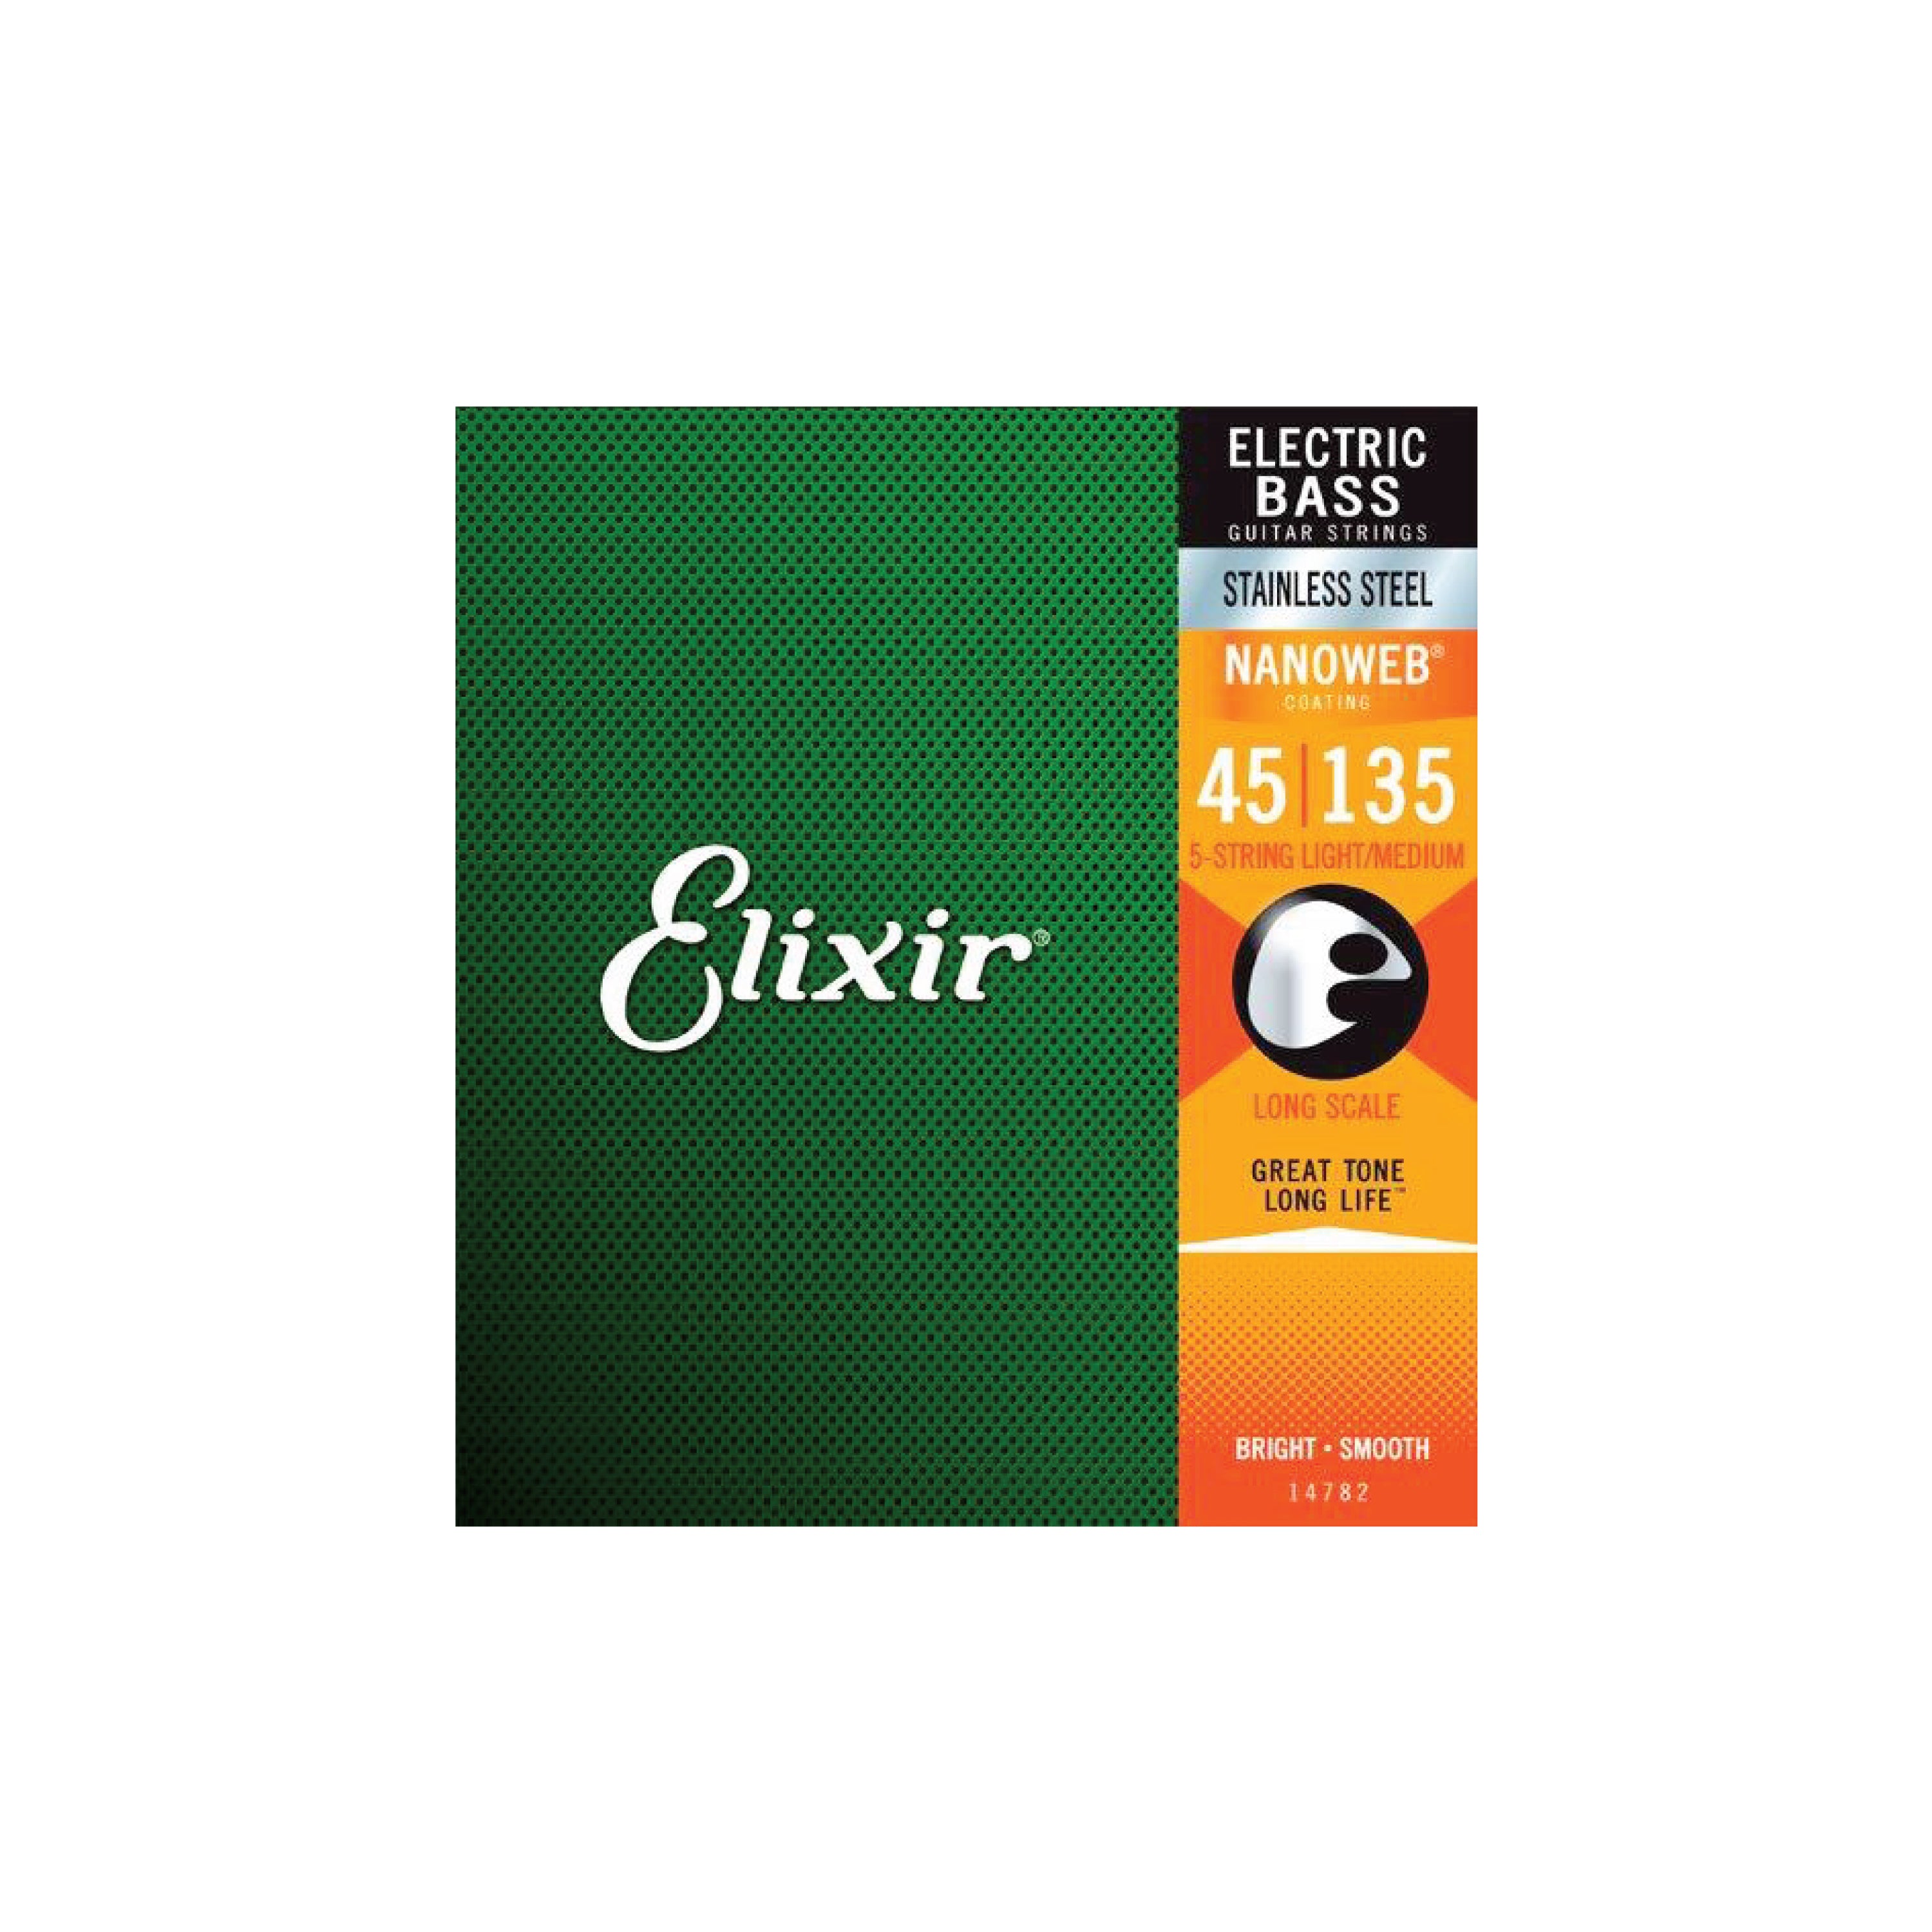 Elixir 14782 Electric Bass Stainless Steel Nanoweb 5 String 45-135 電低音結他弦套裝